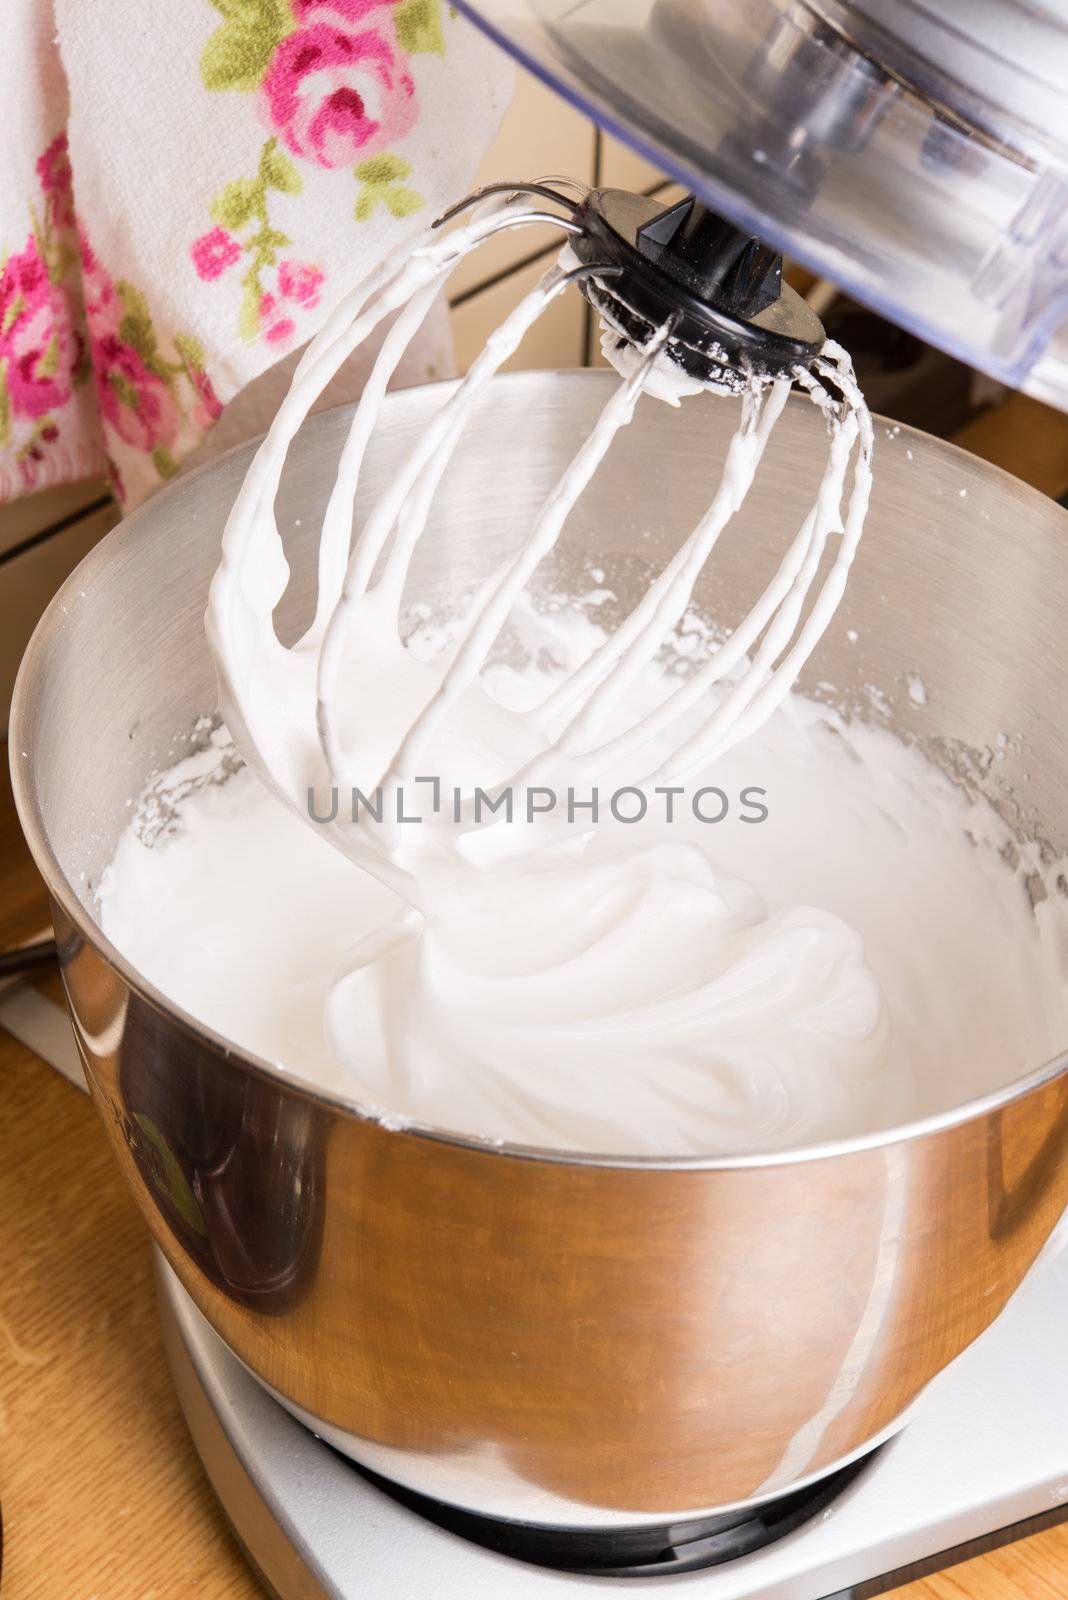 meringue in food processor